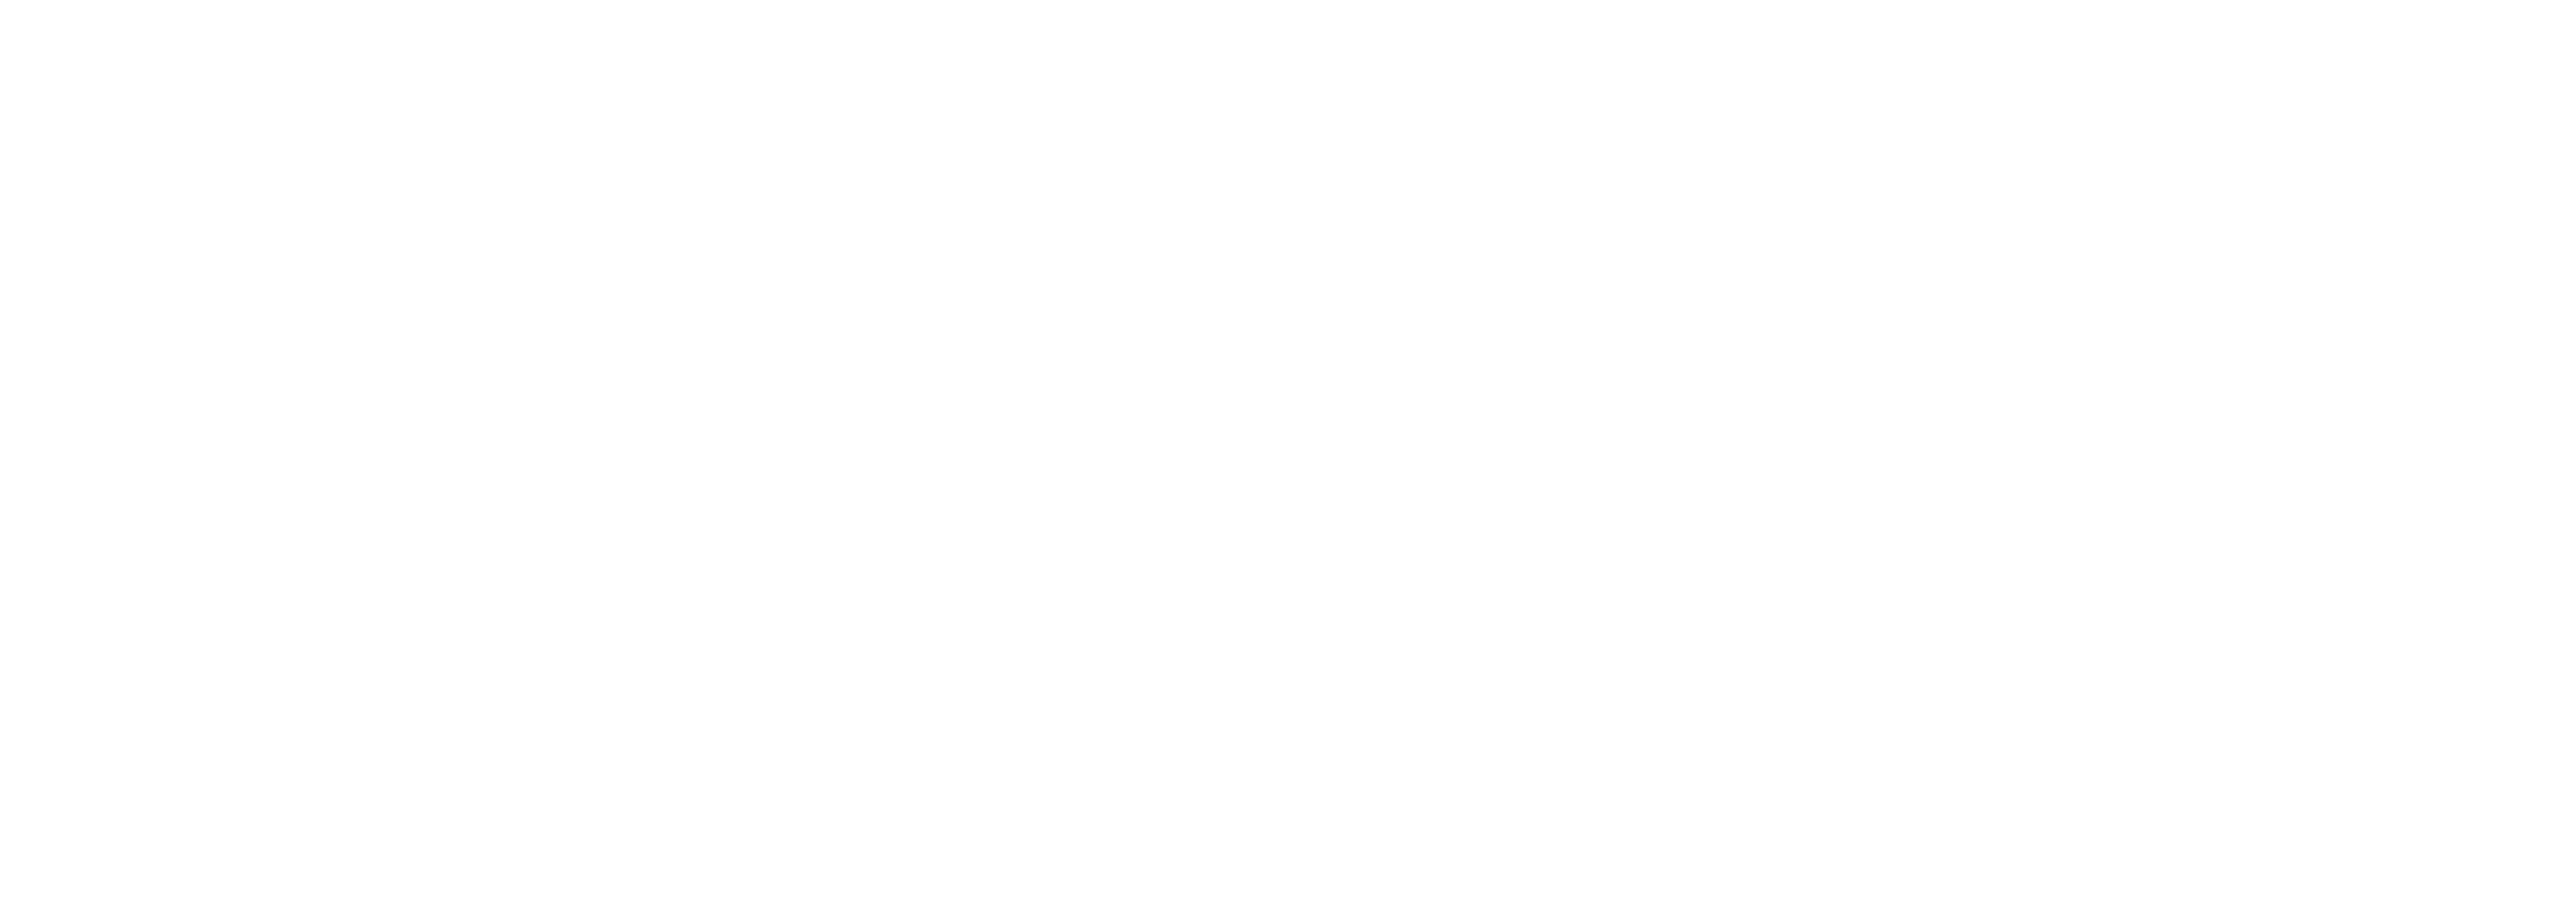 Snowflake clipart diamond. Snowflakes decoration png image